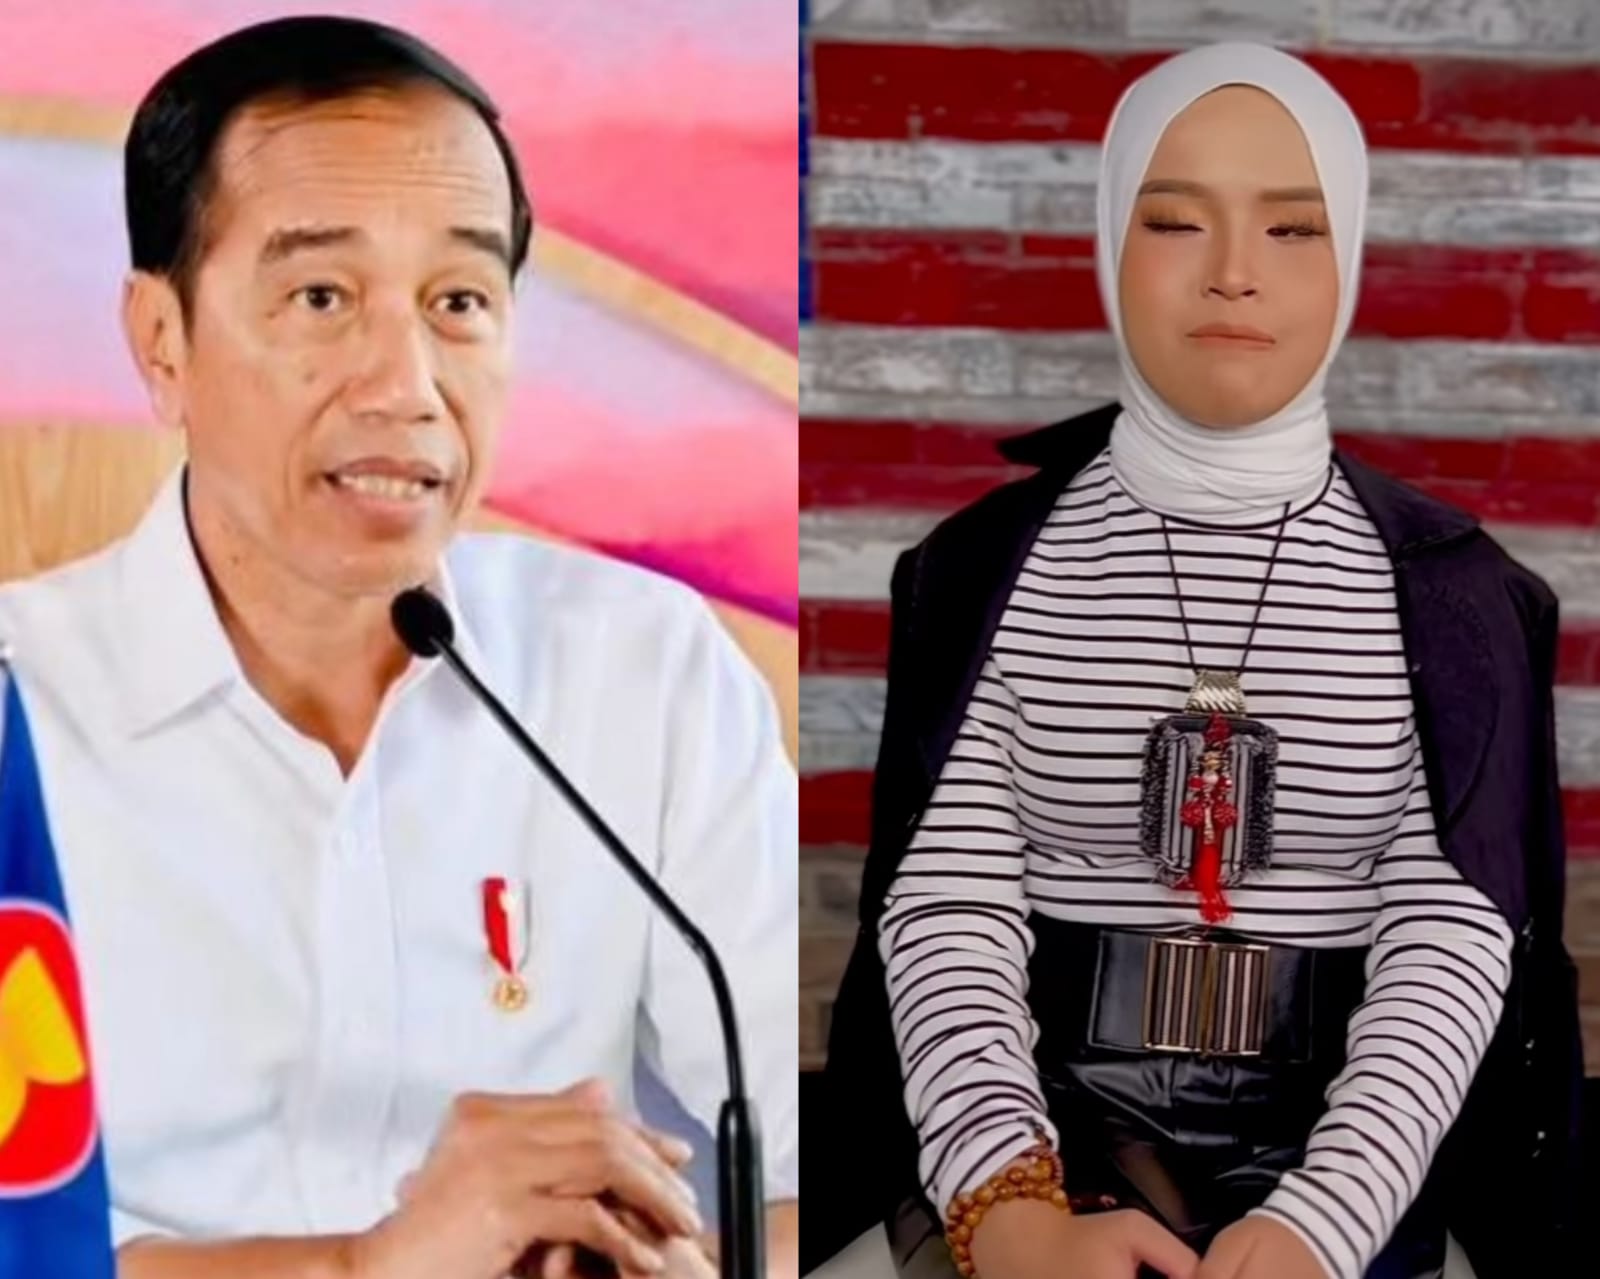 Presiden Jokowi memberikan apresiasi kepada Putri Ariani, peraih Golden Buzzer dalam ajang pencarian bakat America's Got Talent. Kolase Instagram/@jokowi dan @arianinismaputri.